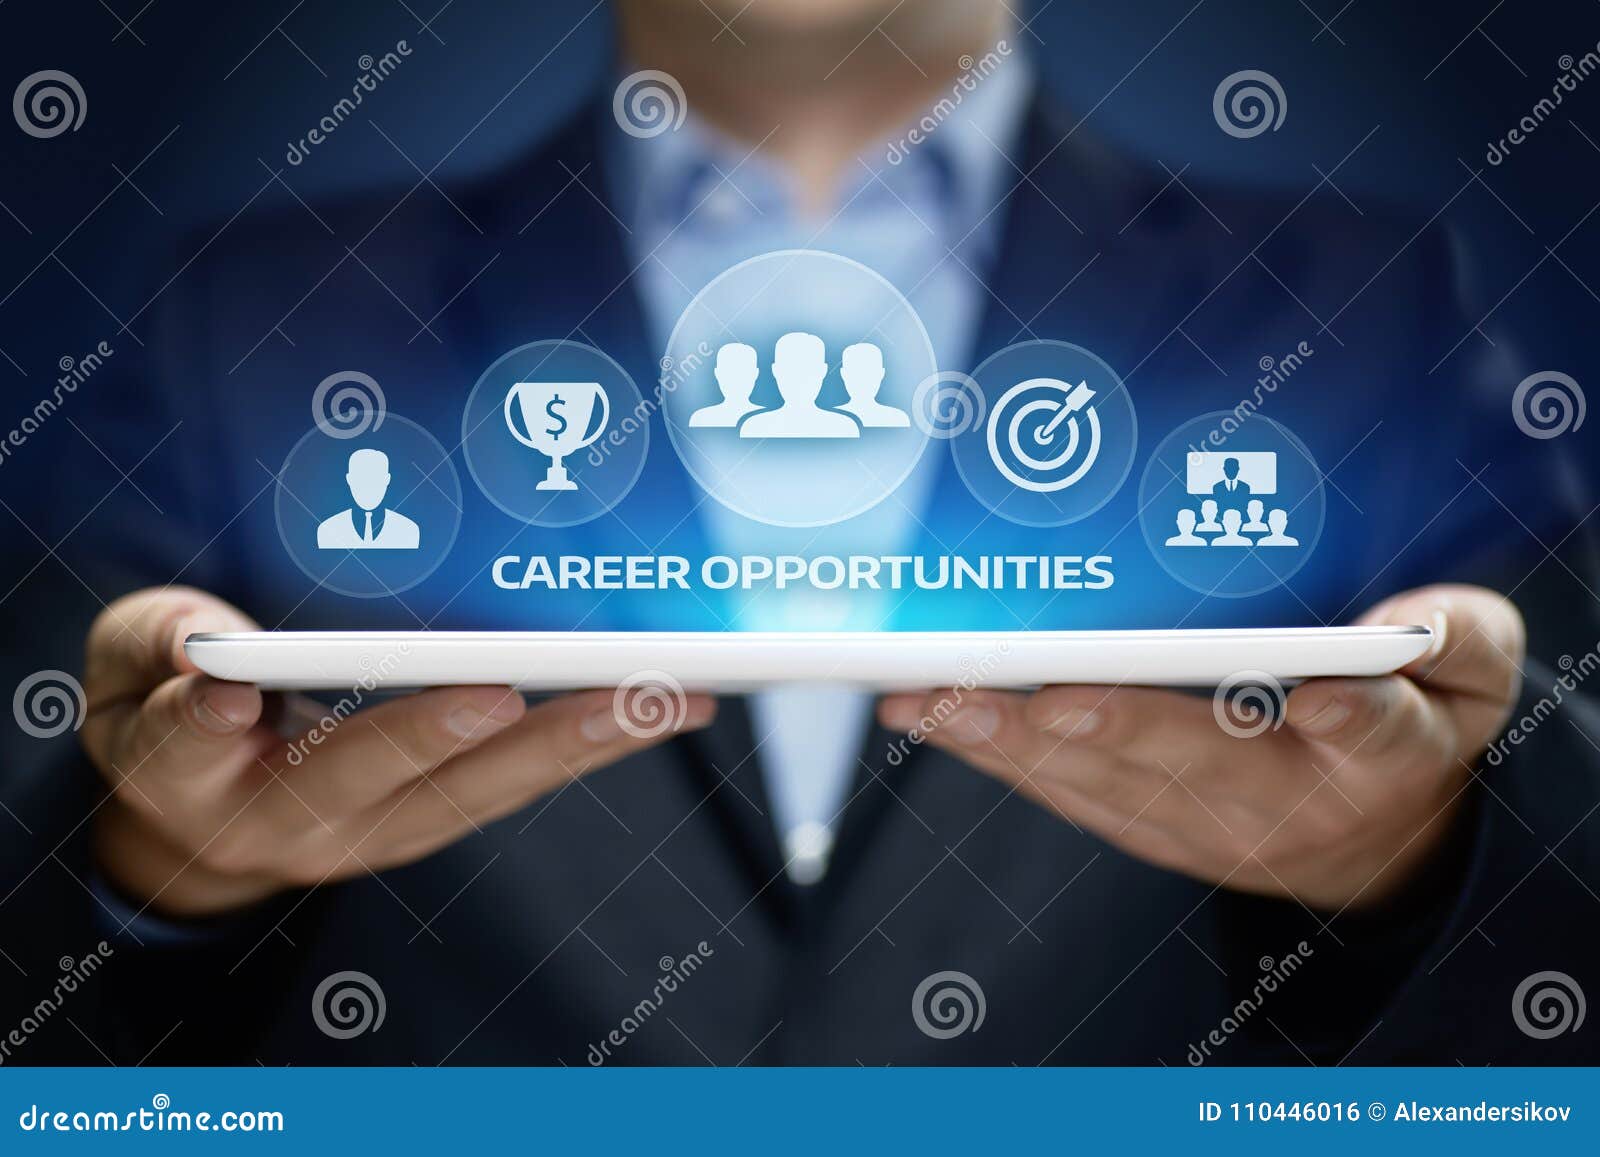 career opportunities motivation business success corporate concept